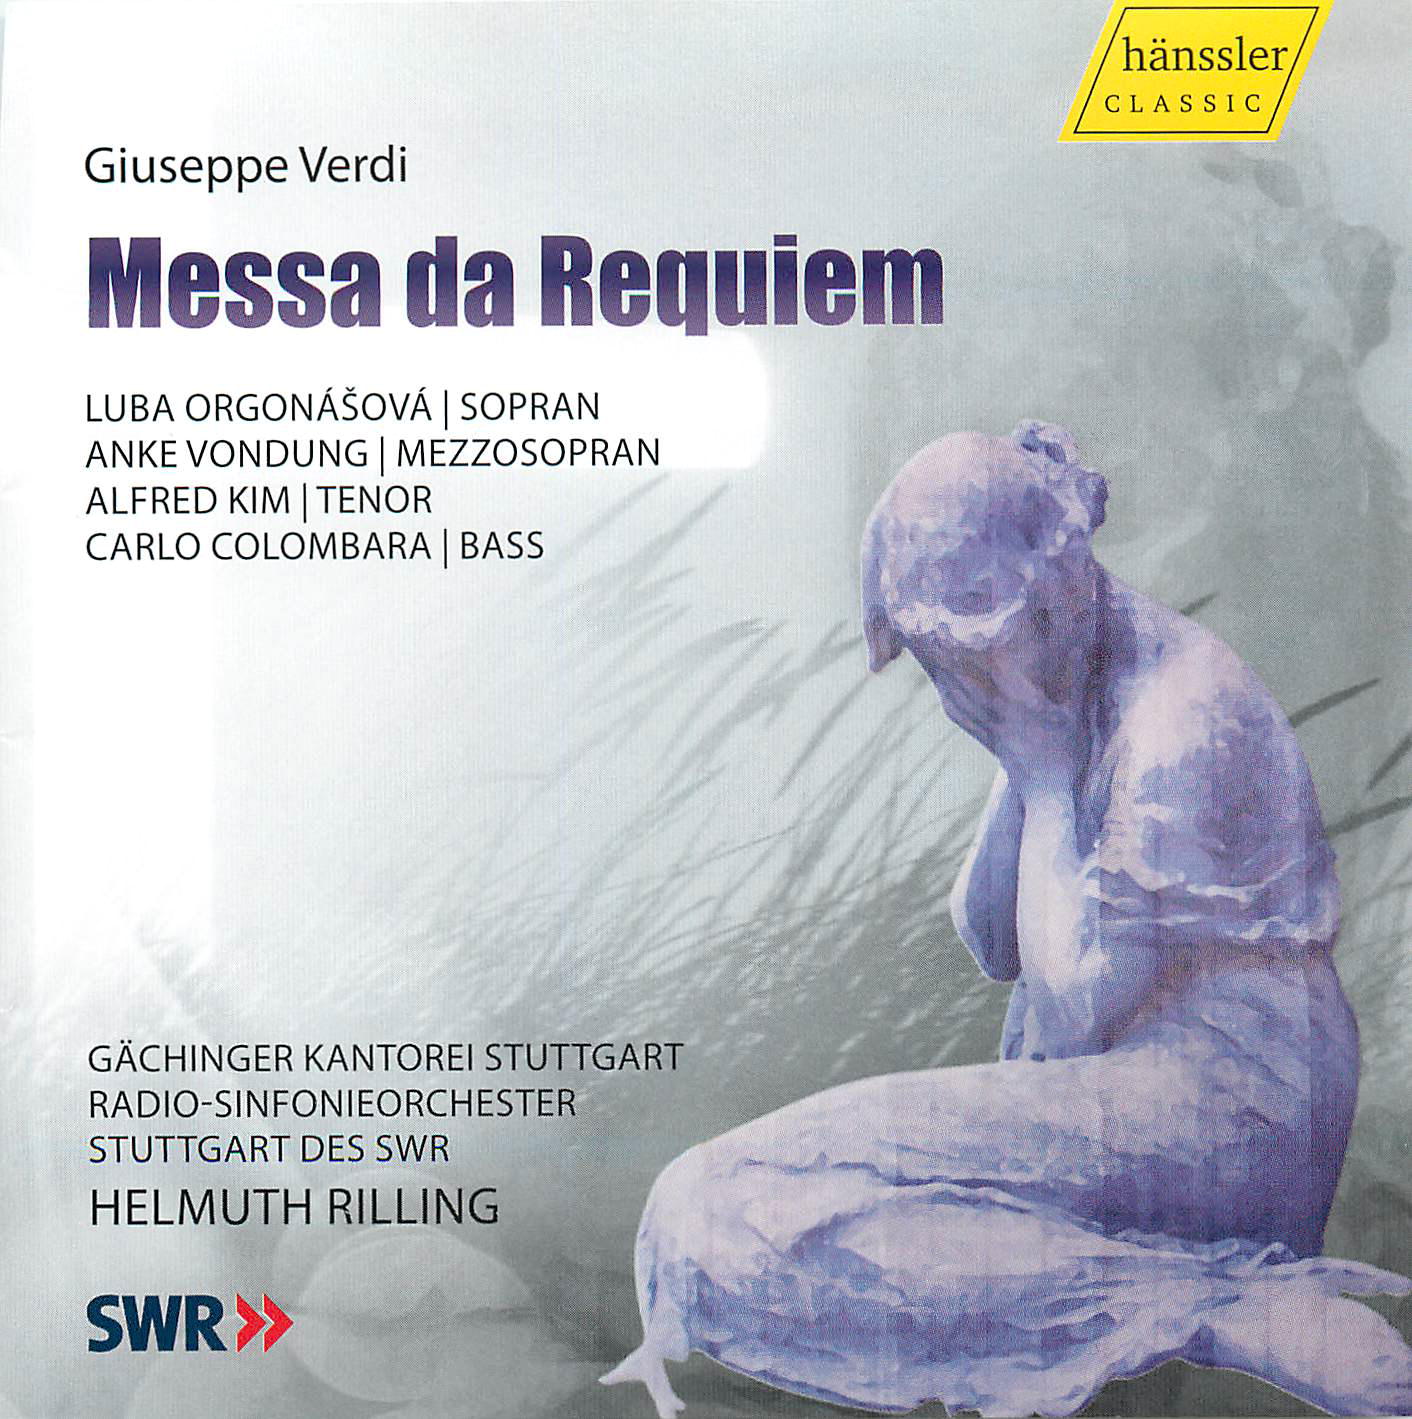 Giuseppe Verdi: Messa da Requiem  Alexander Street, part of Clarivate